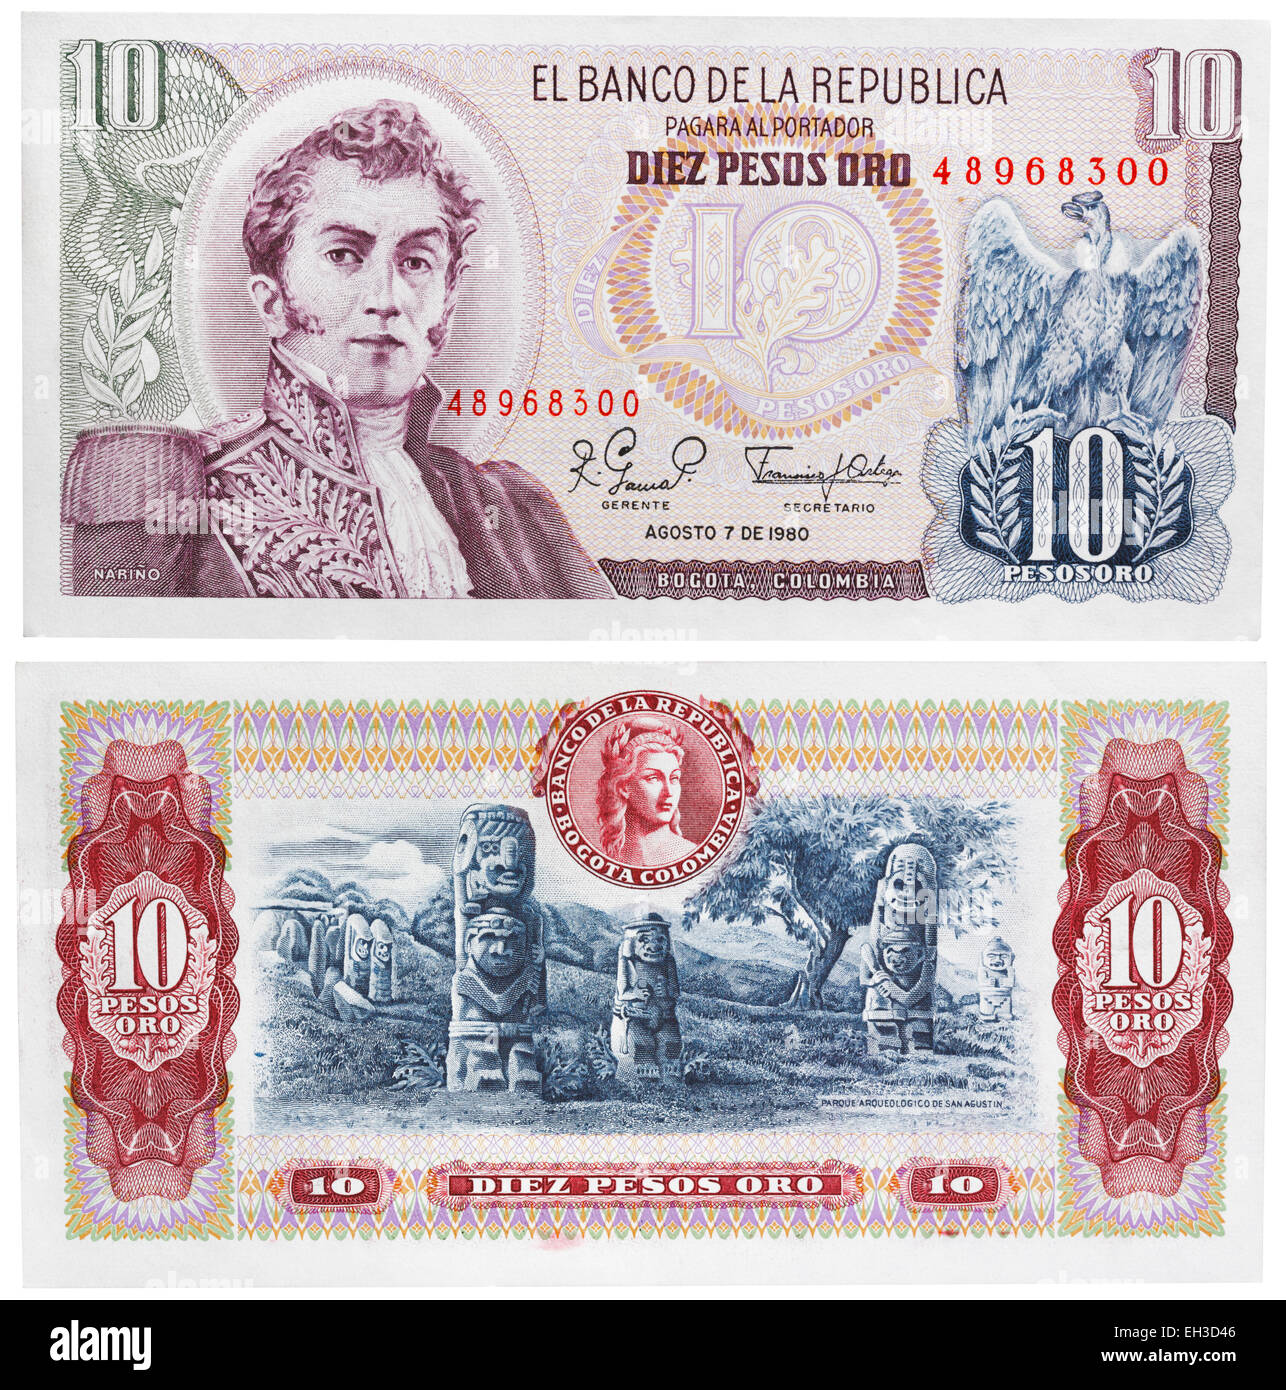 10 Pesos Oro Banknote, Antonio Nariño, Kolumbien, 1980 Stockfoto